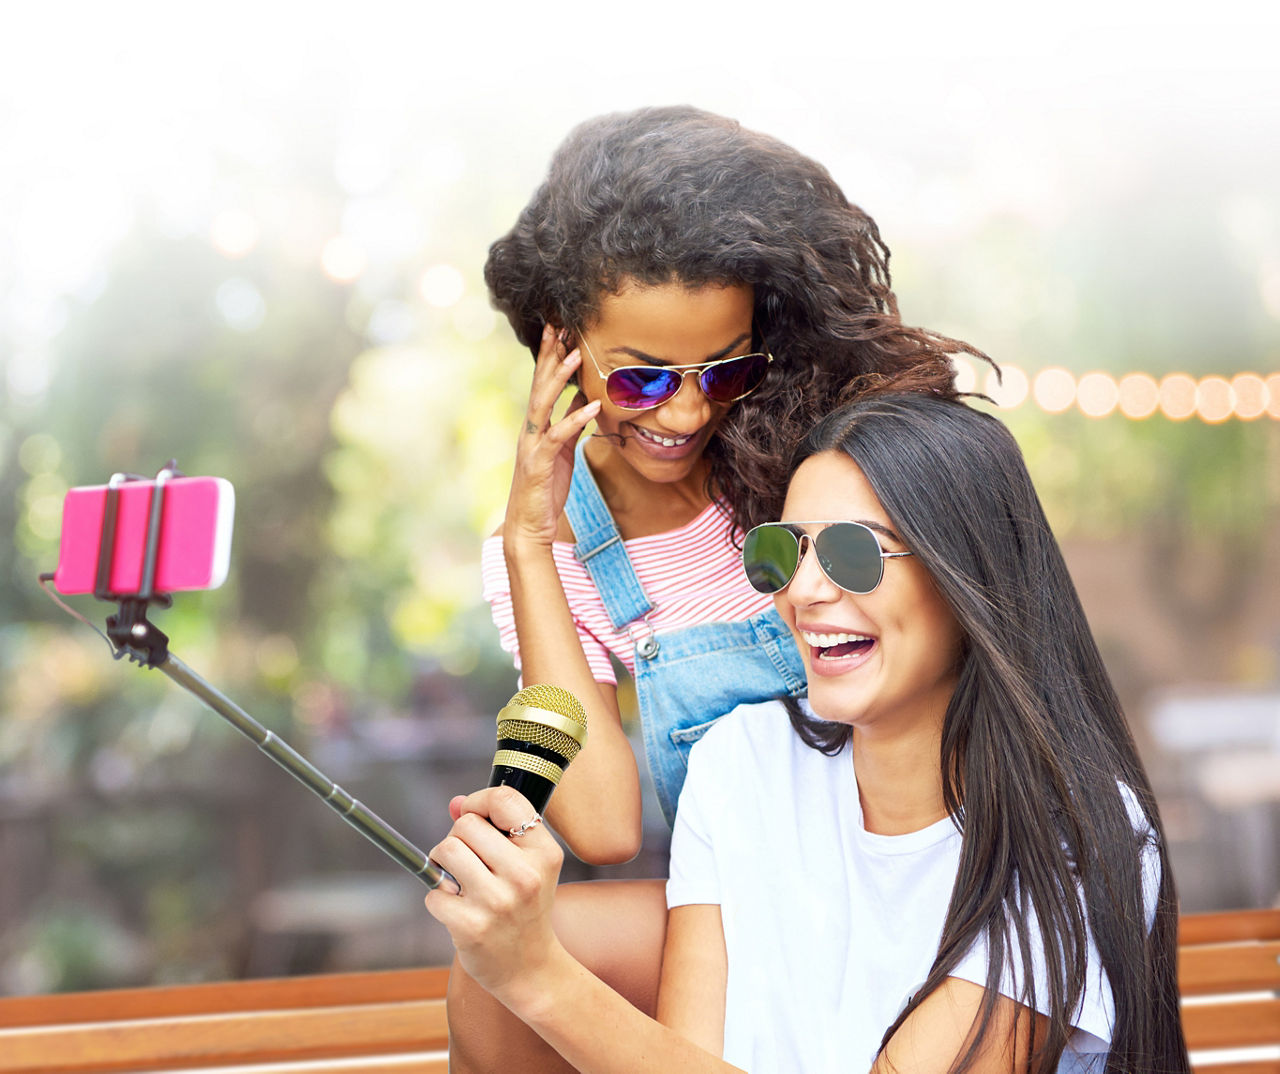 Polaroid Selfie Stick Bluetooth Svart